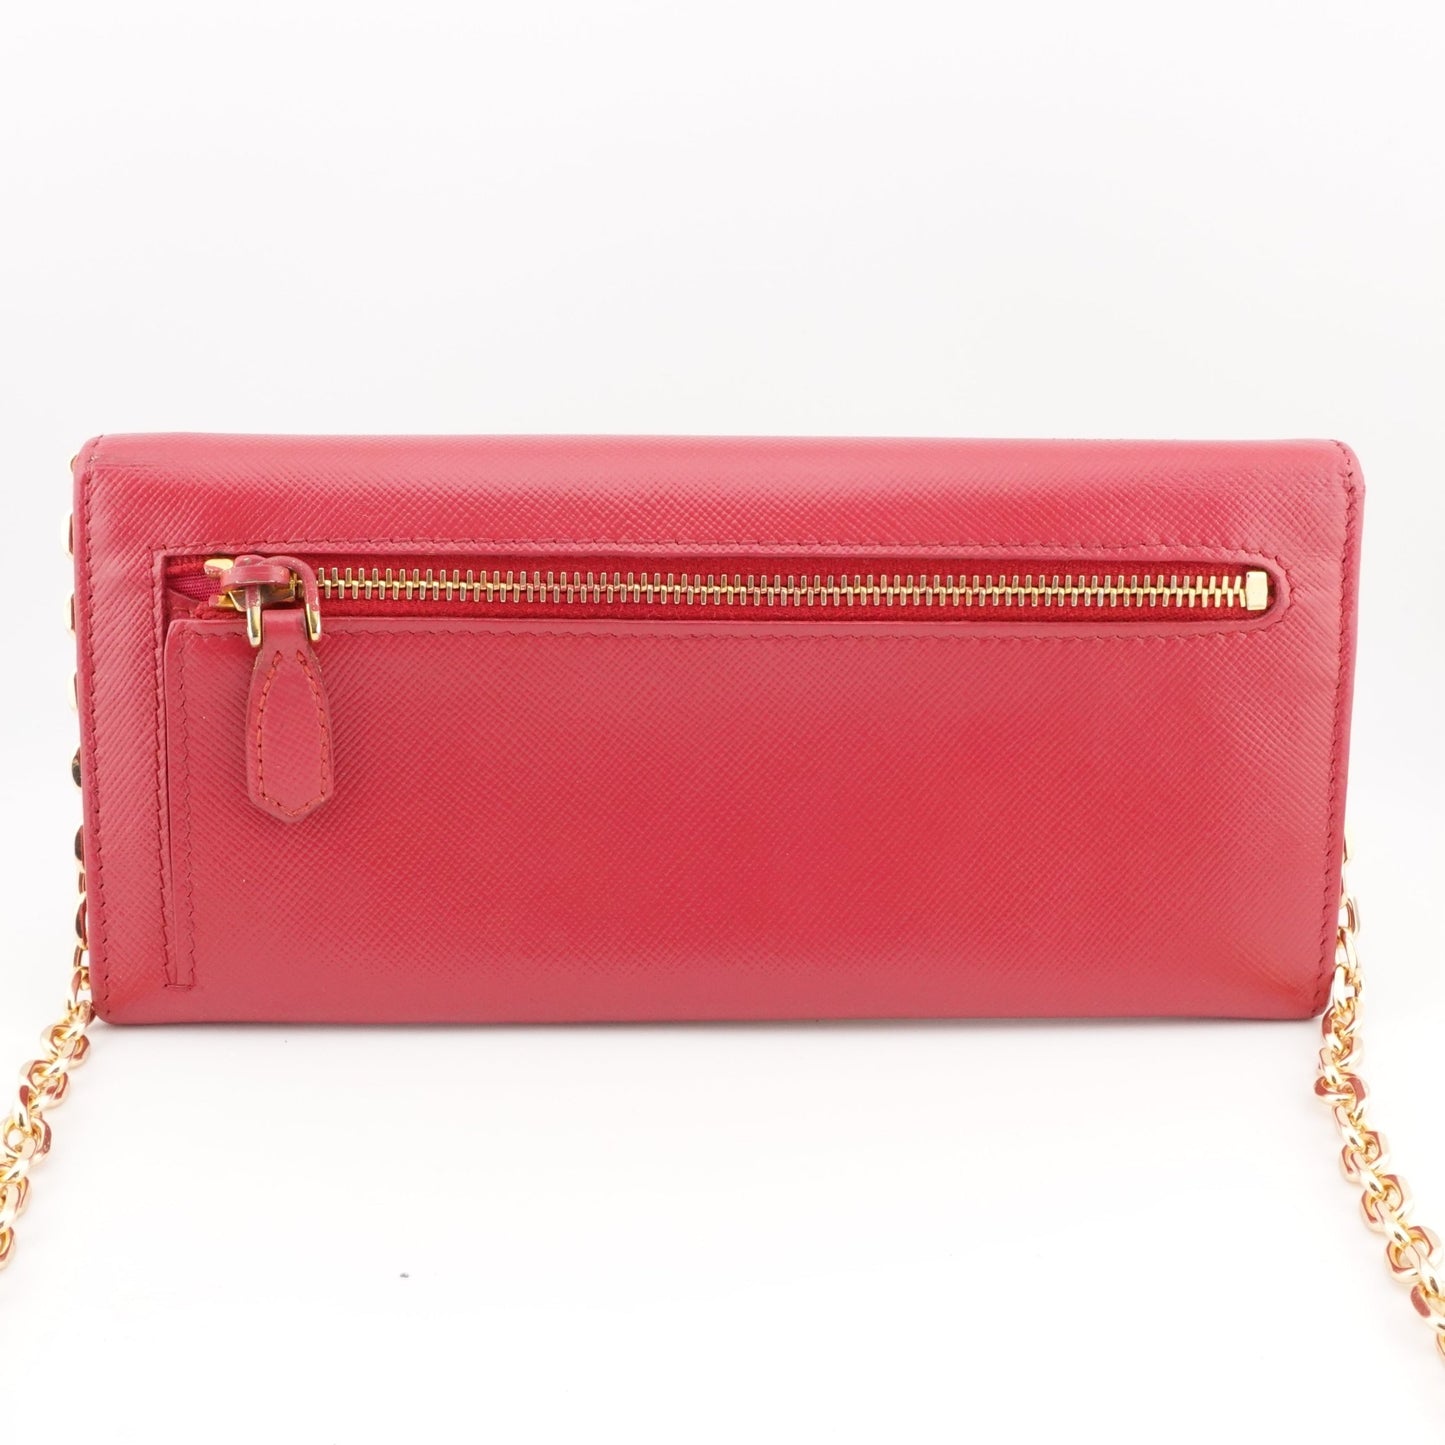 PRADA Saffiano Leather Wallet on Chain - Bag Envy